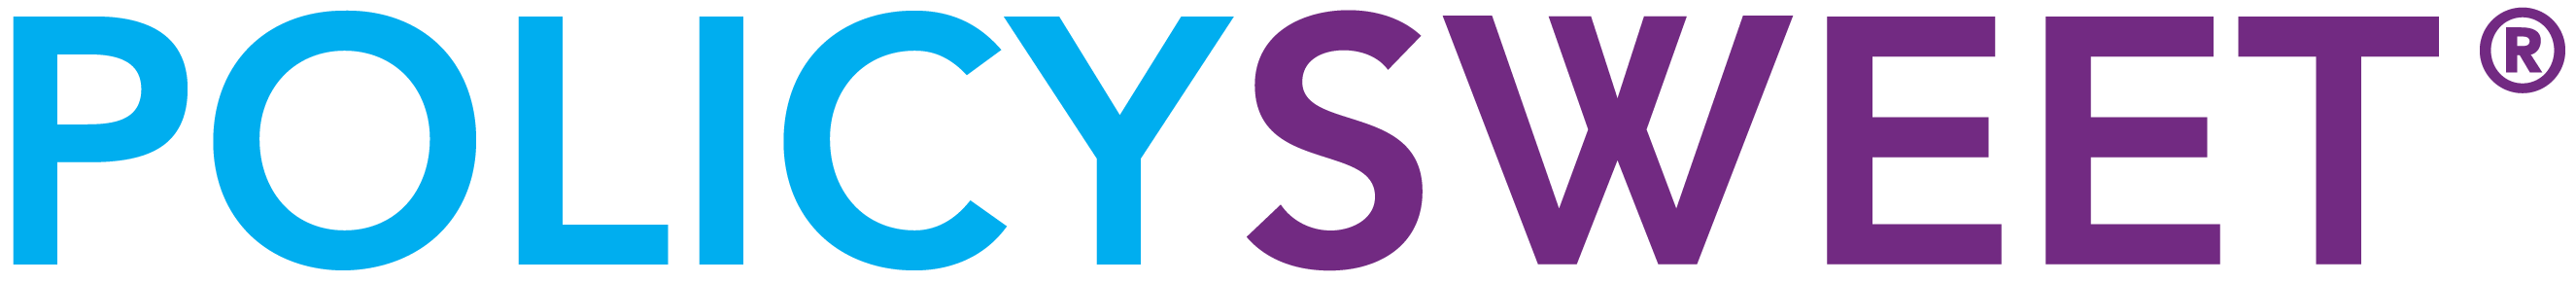 PolicySweet logo